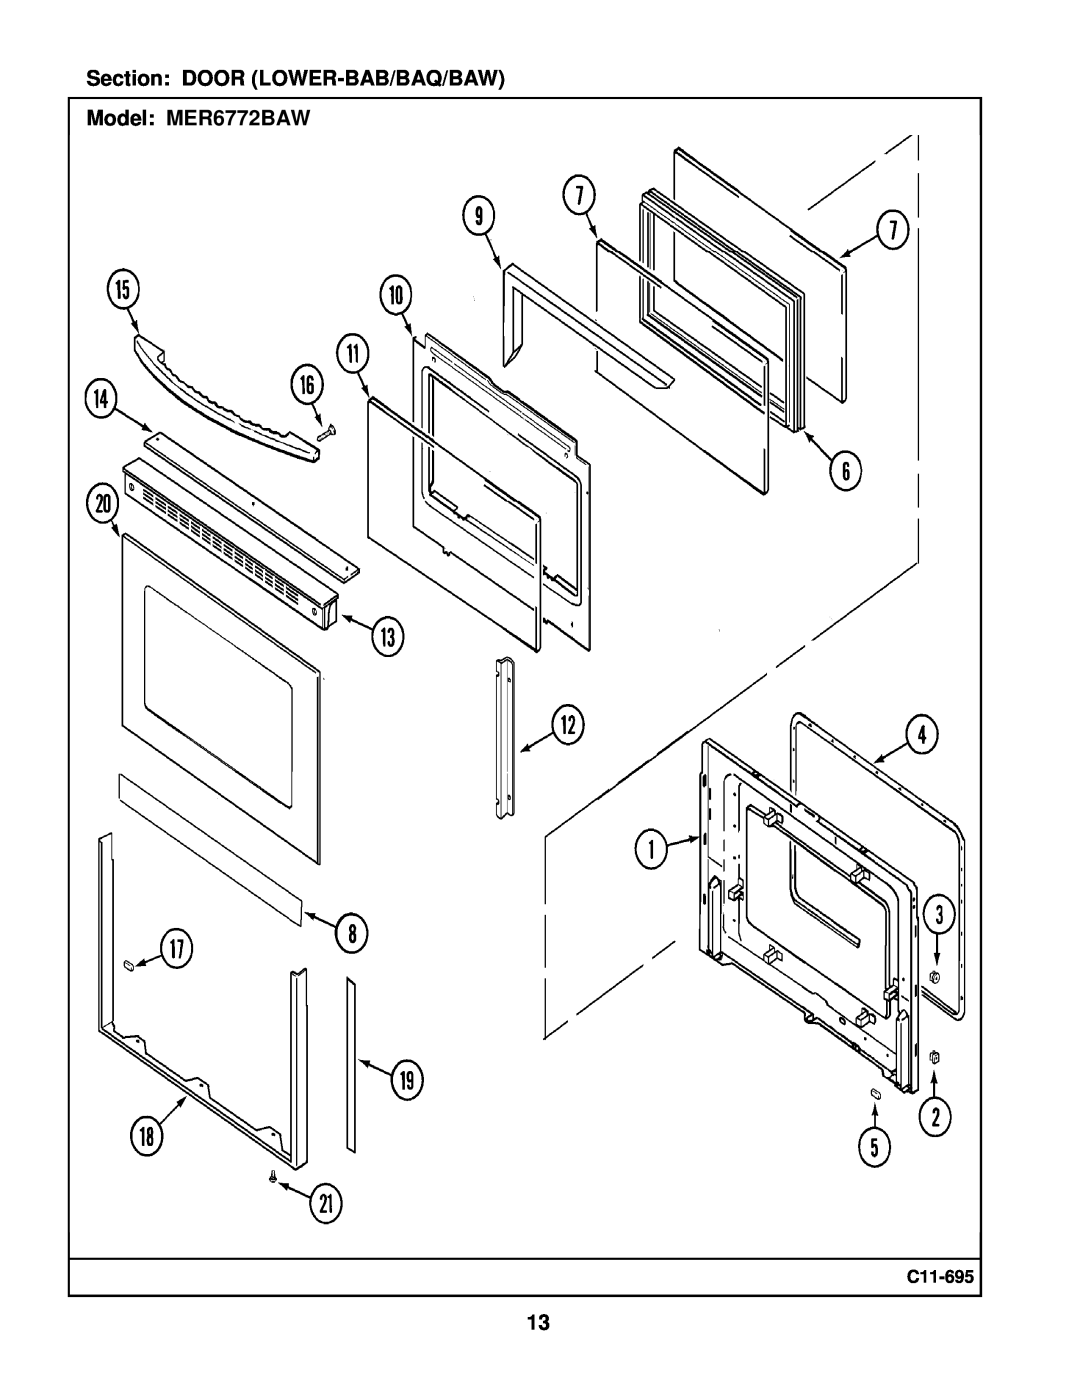 Maytag manual Section DOOR LOWER-BAB/BAQ/BAW Model MER6772BAW, C11-695 